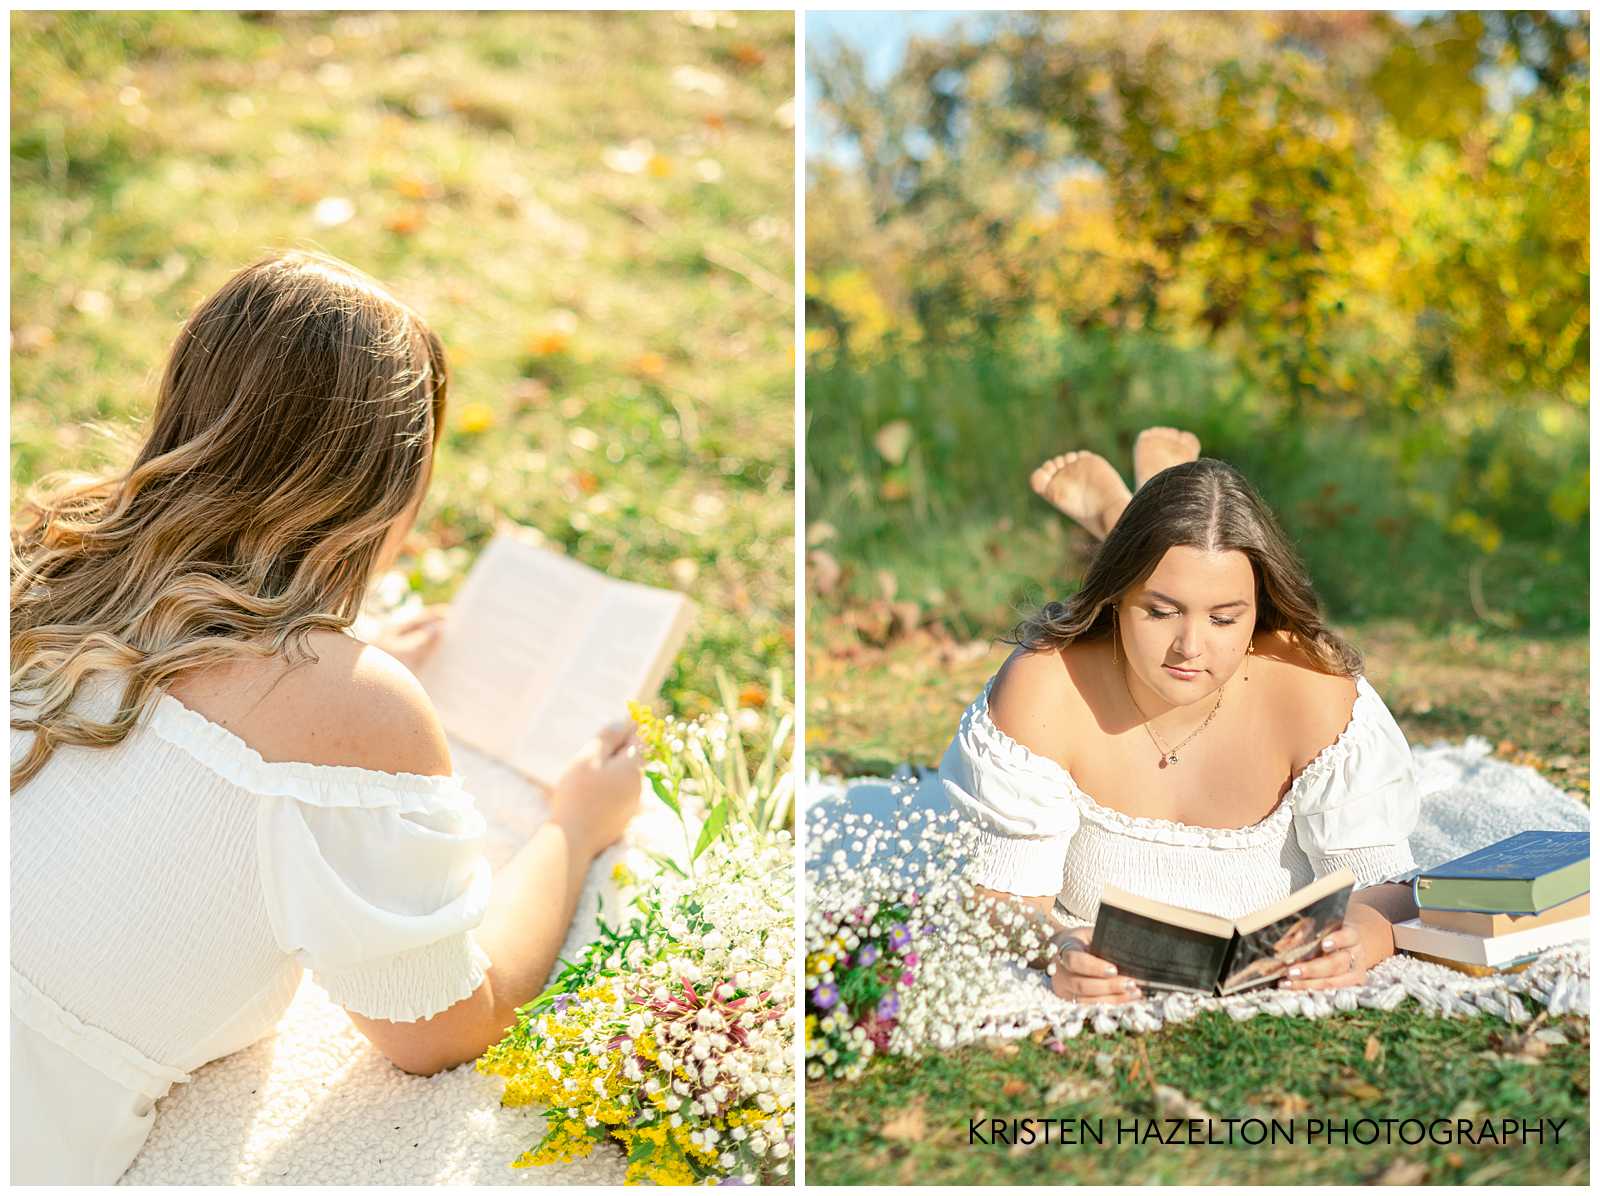 Bibliophile high school senior girl reading books on a blanket on the grass